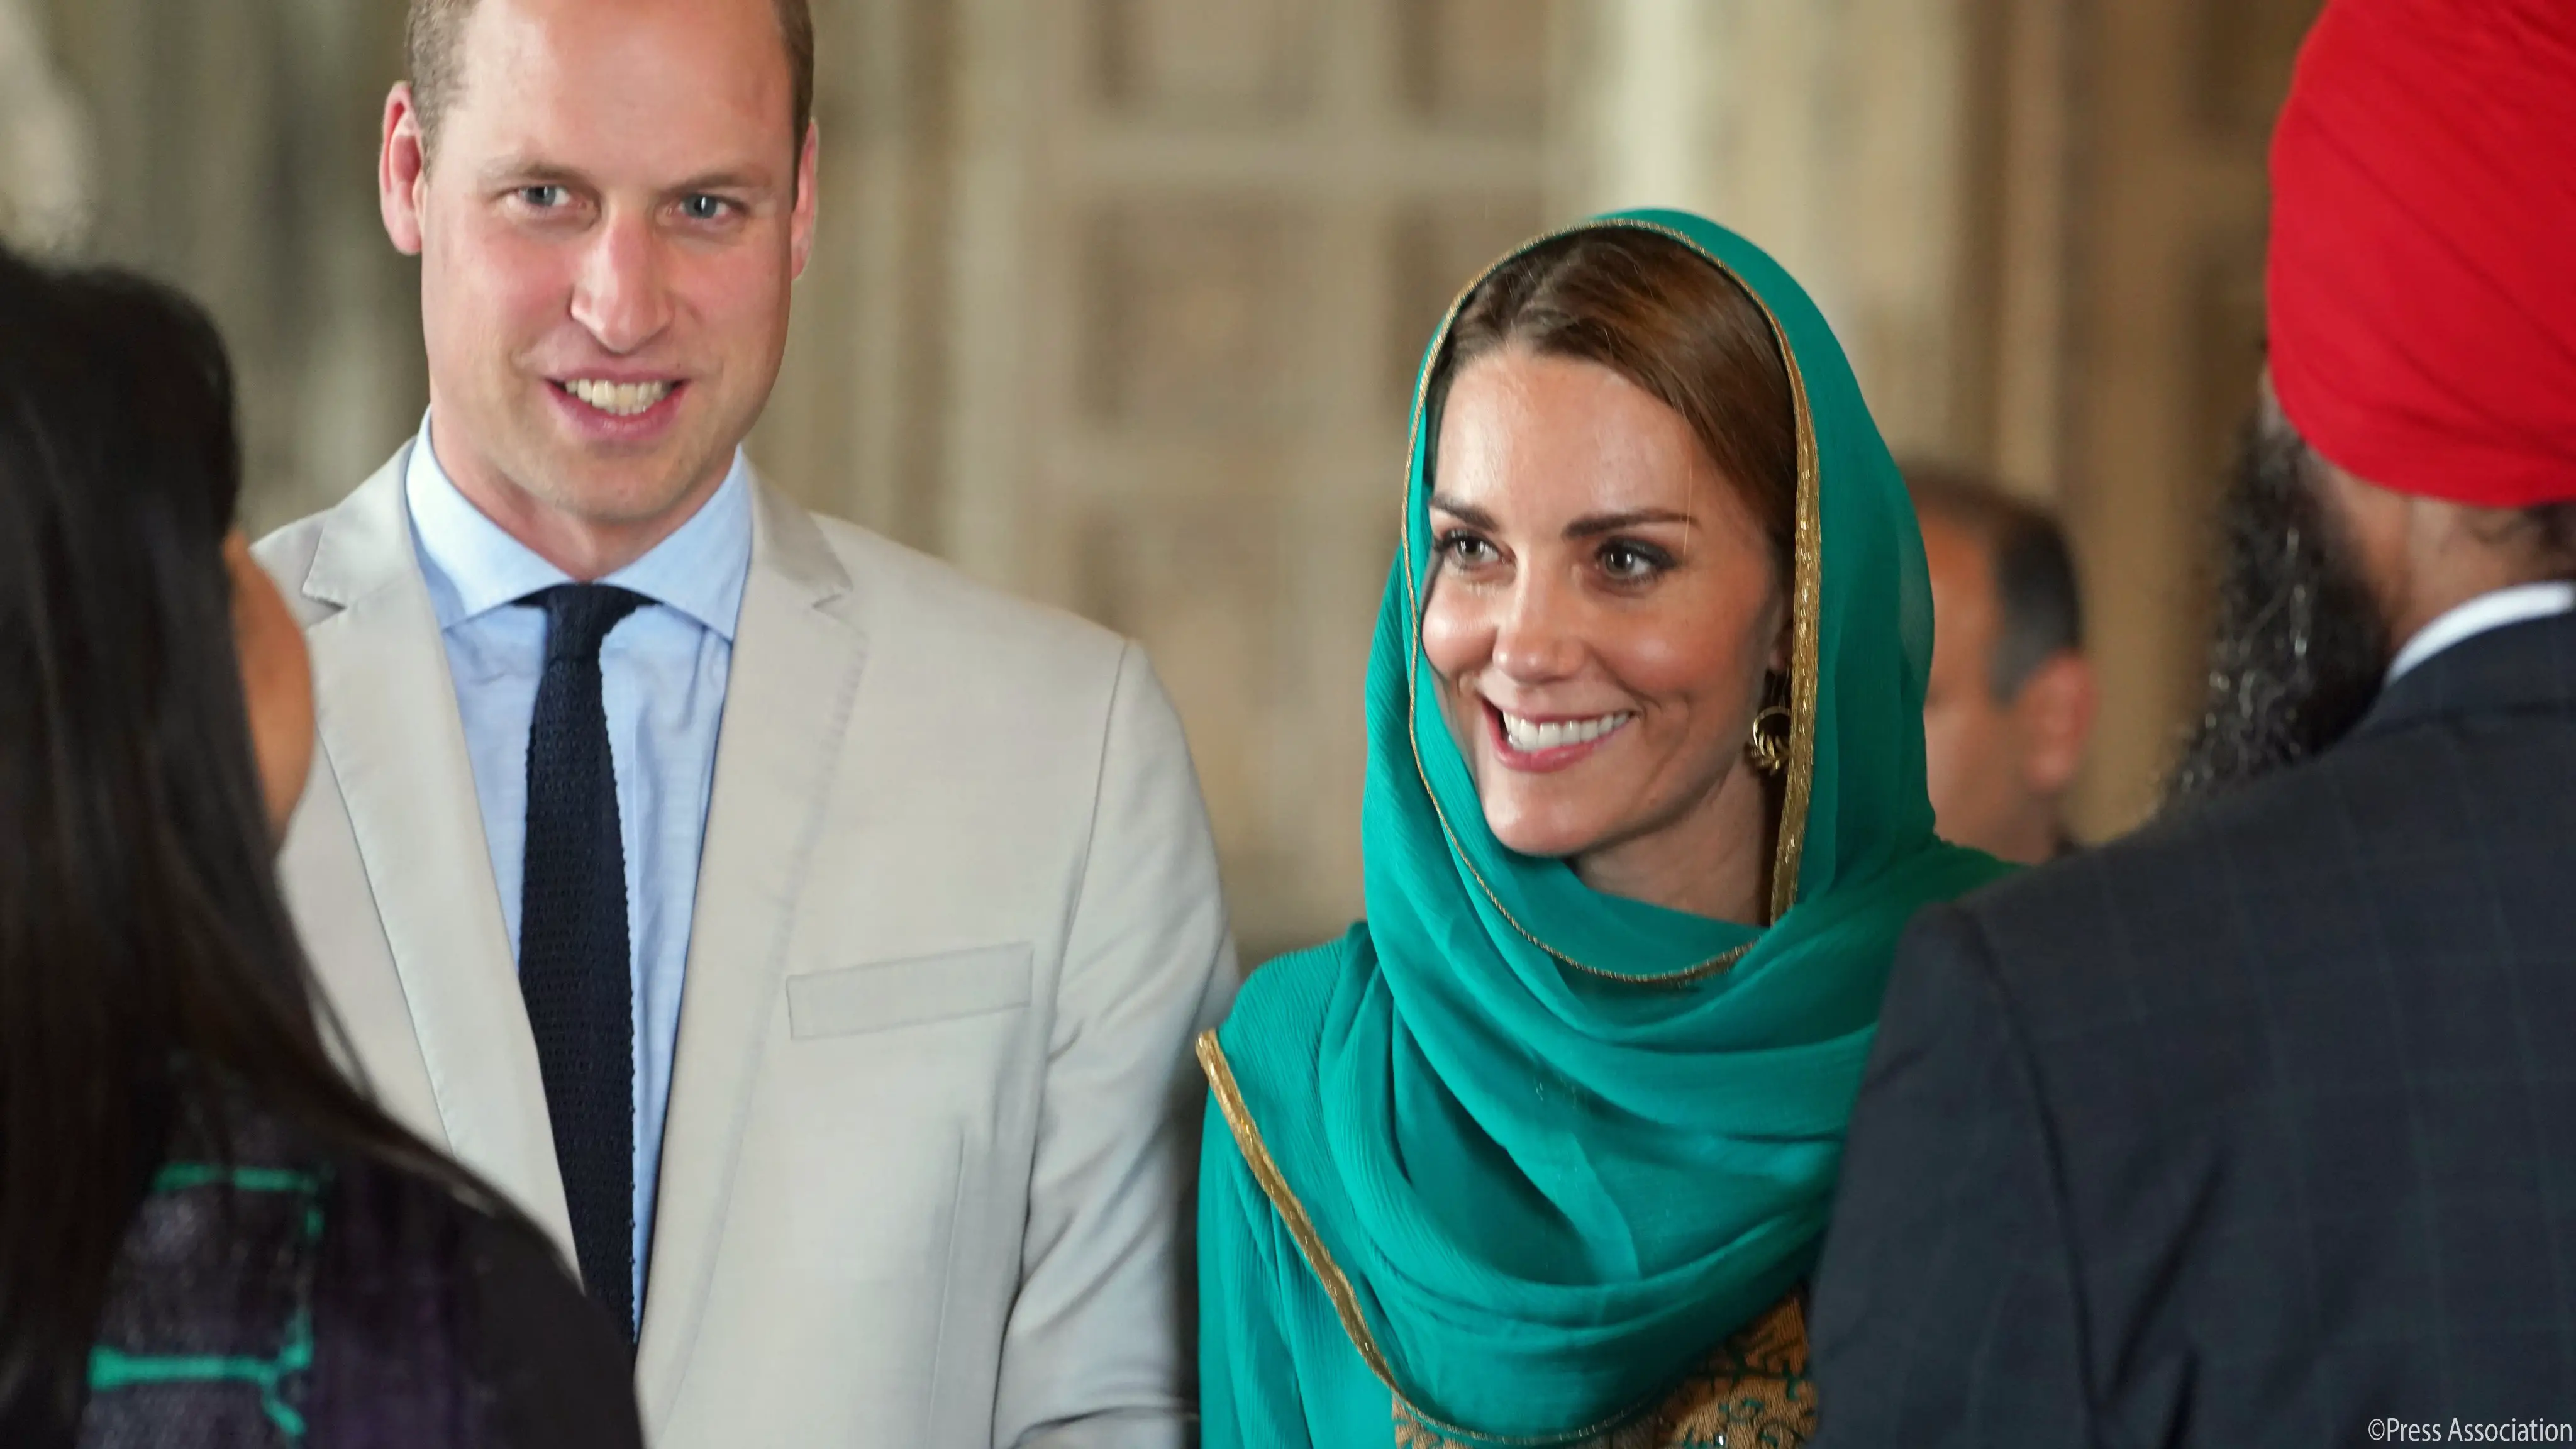 Duke and Duchess of Cambridge visited Iconic Badshahi Mosque in Lahore Pakistan